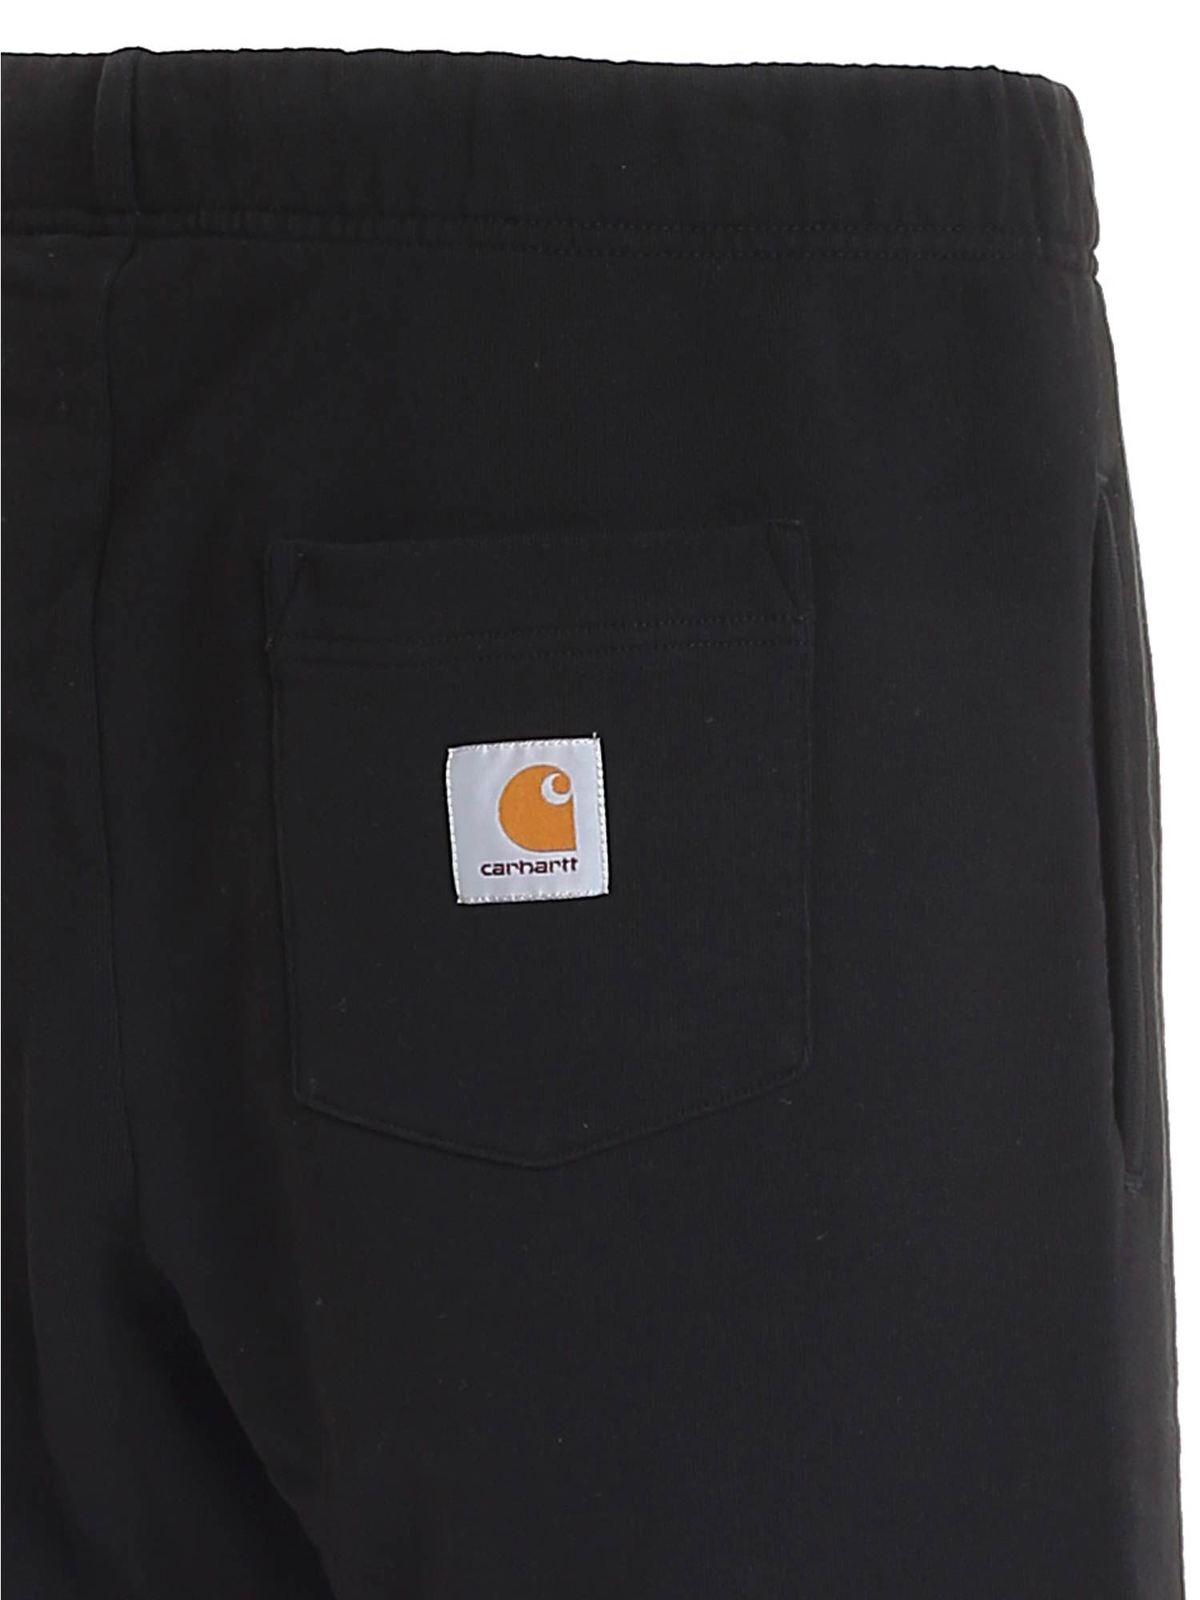 Pantalones Cortos Carhartt - Shorts - Negro - | iKRIX.com